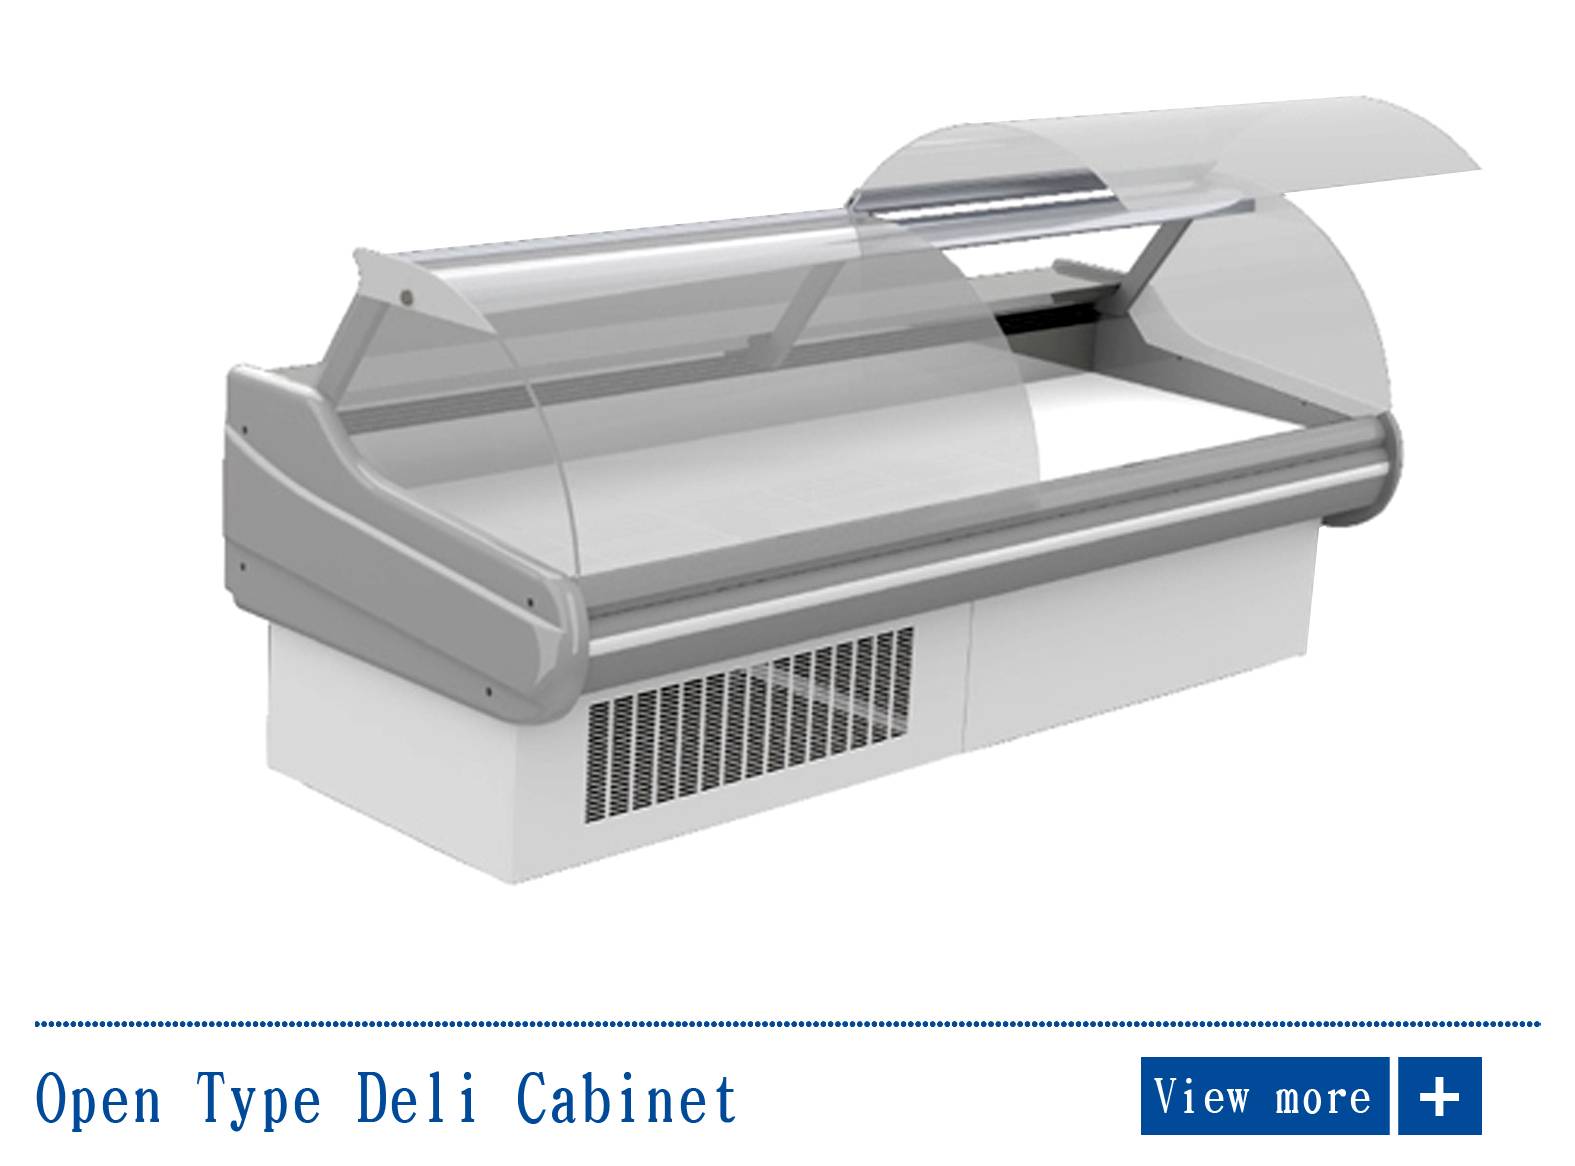 Open Type Deli Cabinet